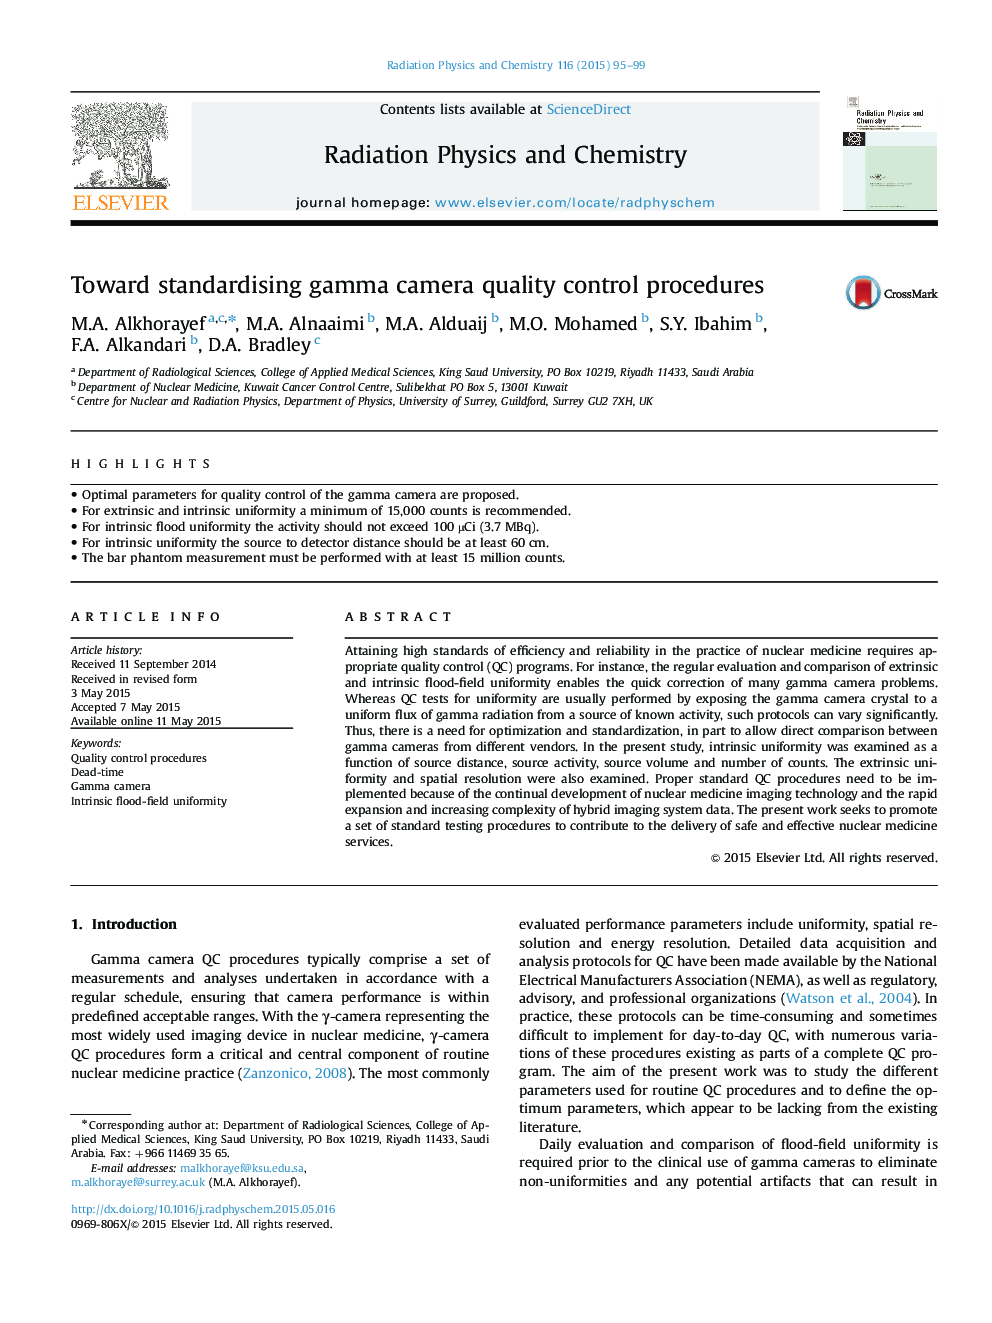 Toward standardising gamma camera quality control procedures